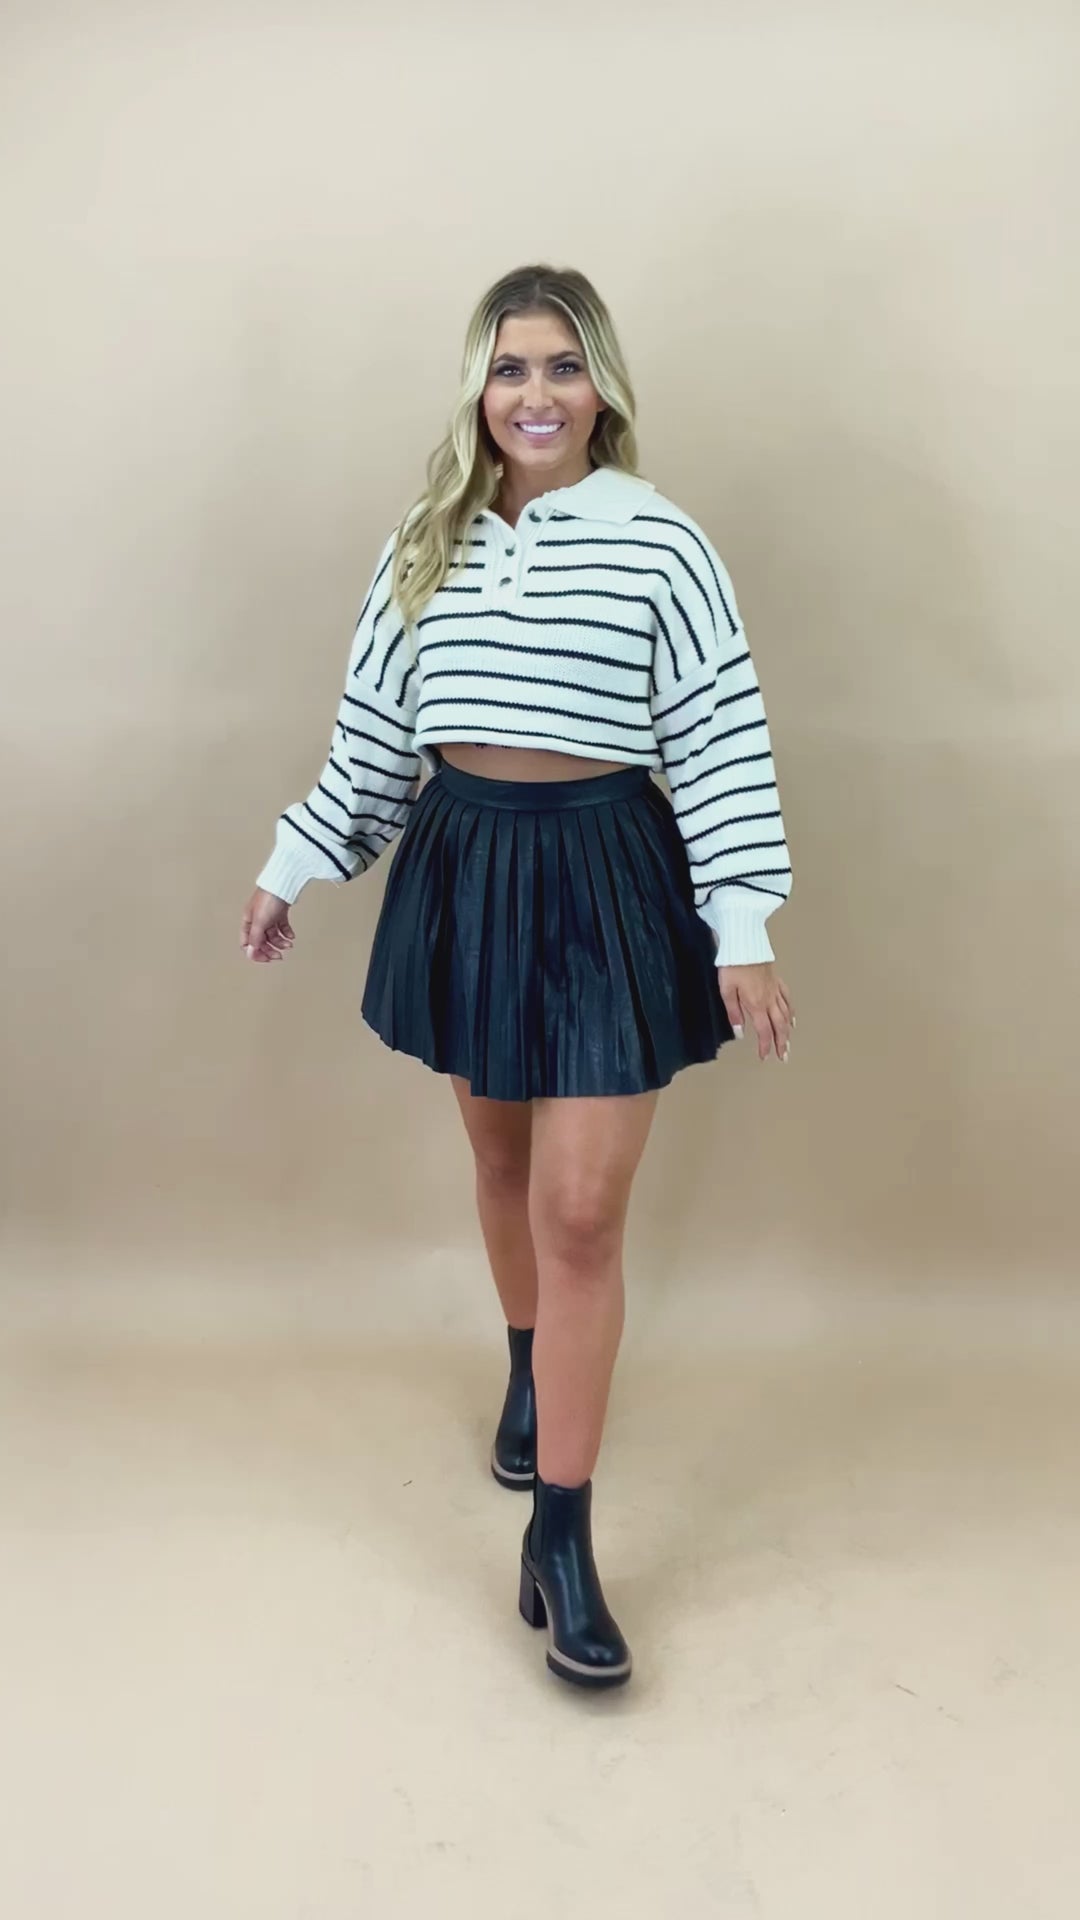 Black Mesh Flare Mini Skirt  Flared mini skirt, Mini skirts